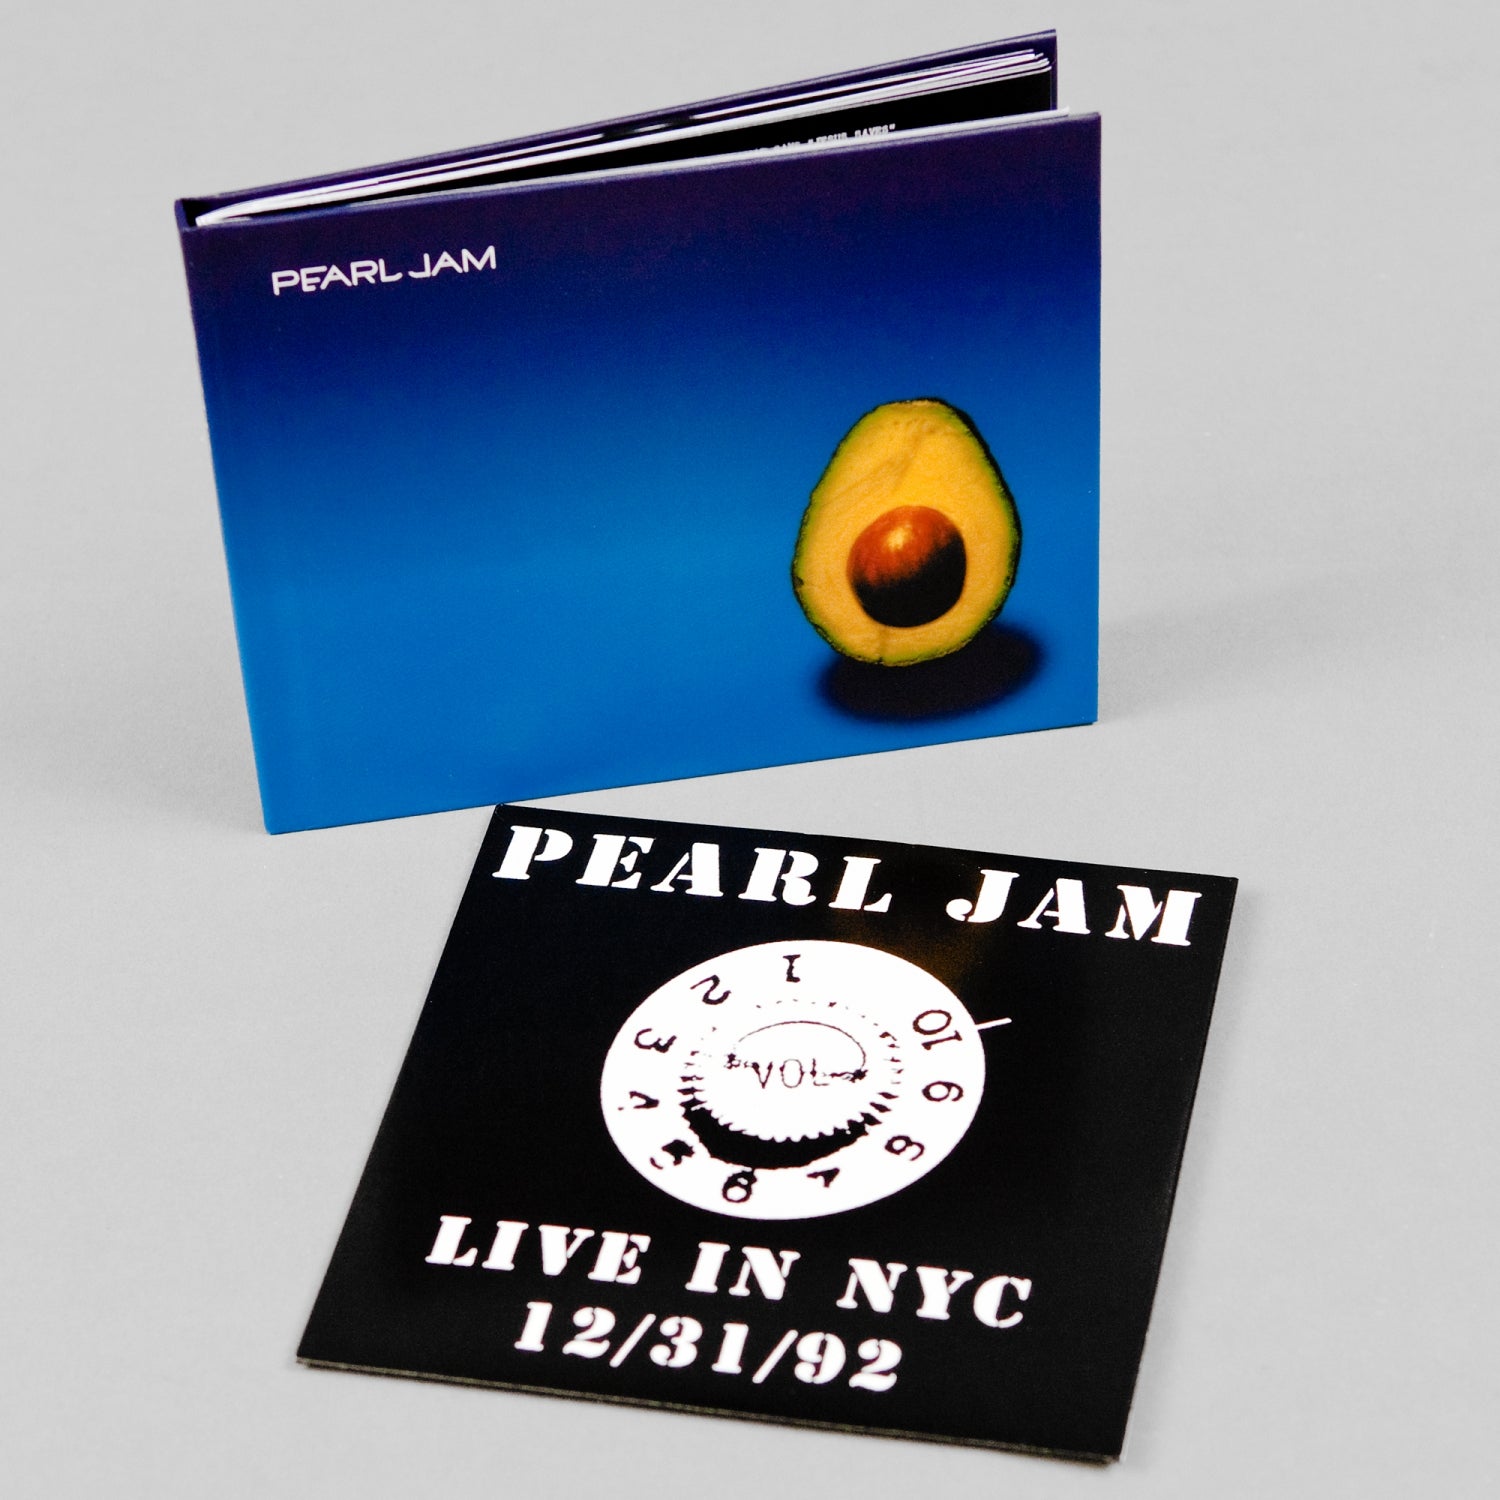 TEN CLUB EDITION PEARL JAM CD